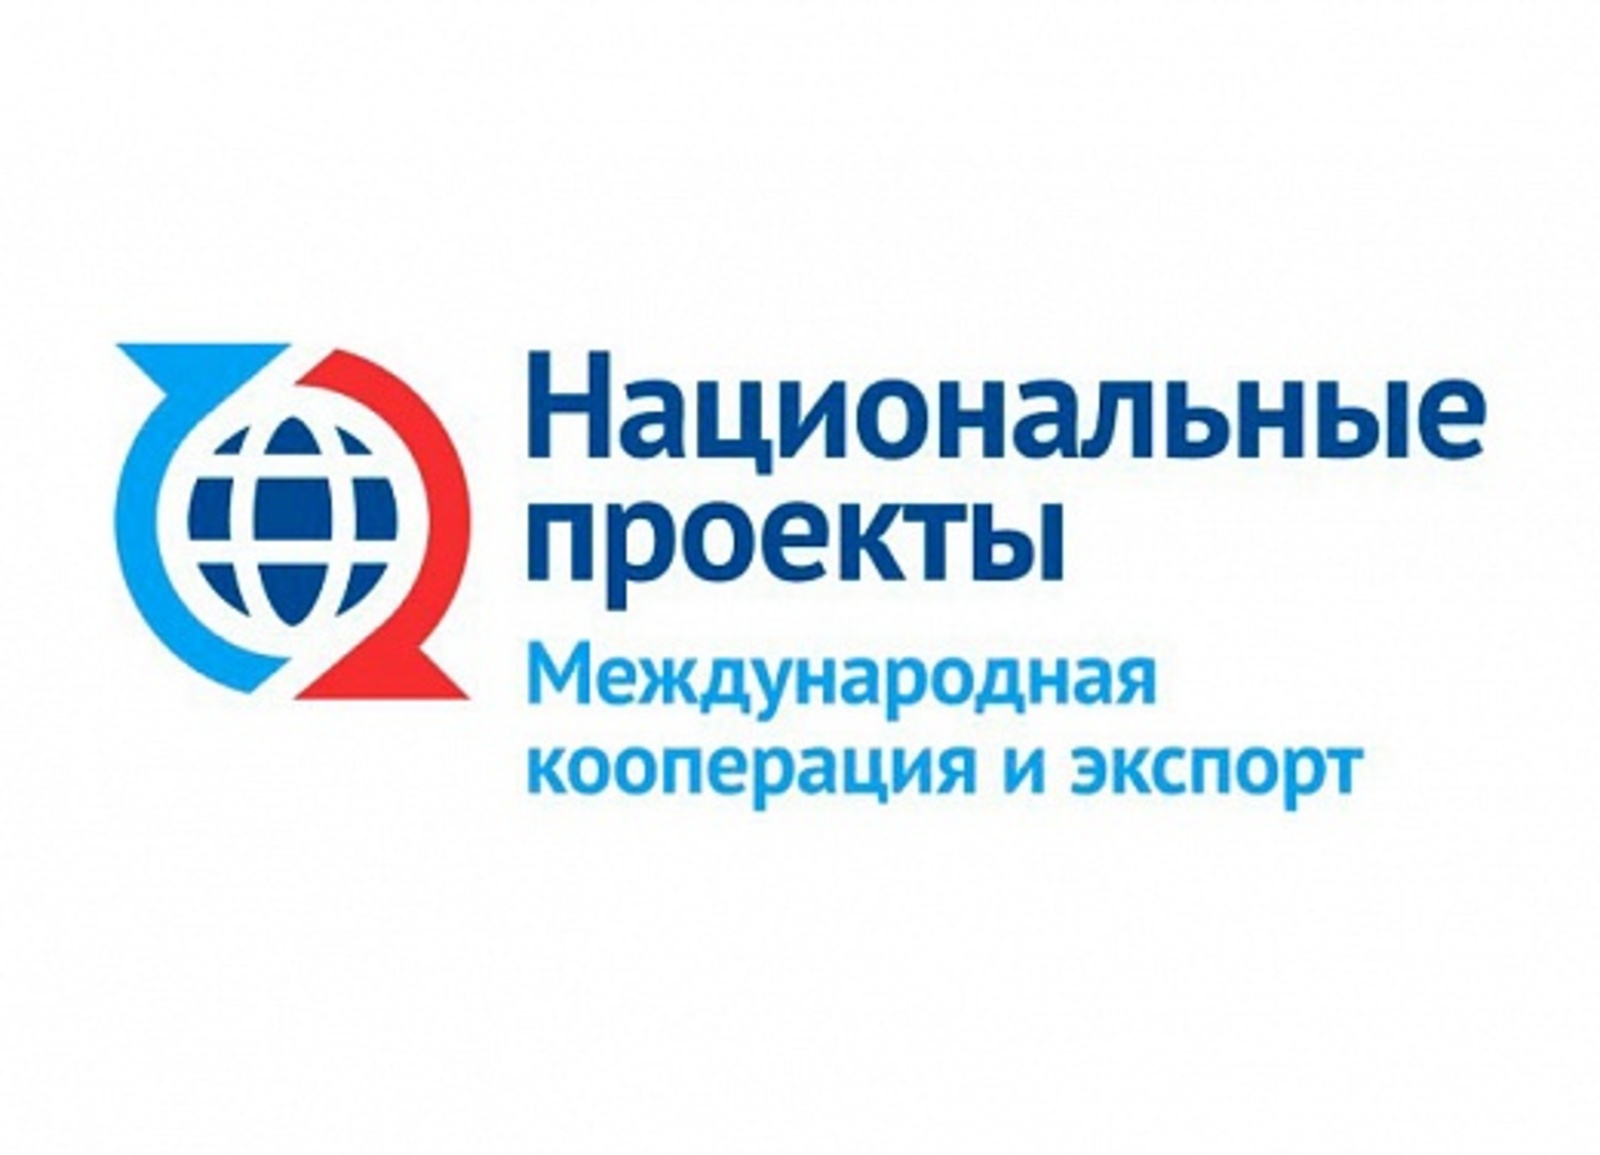 Башкортостан увеличил экспорт зерна